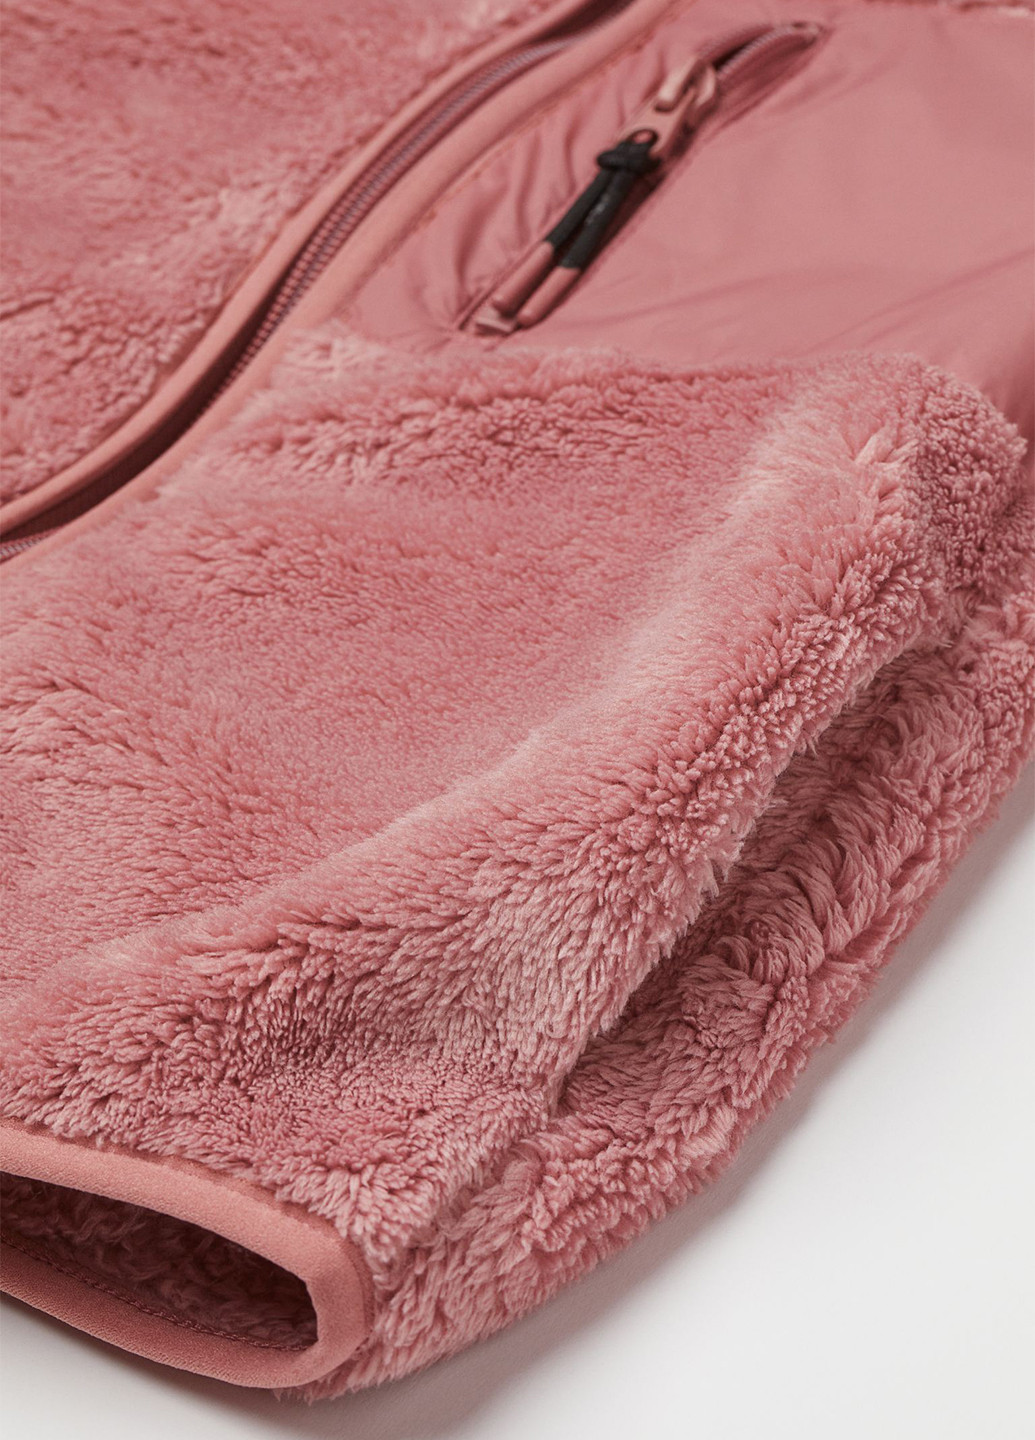 Розово-коричневая демисезонная куртка H&M